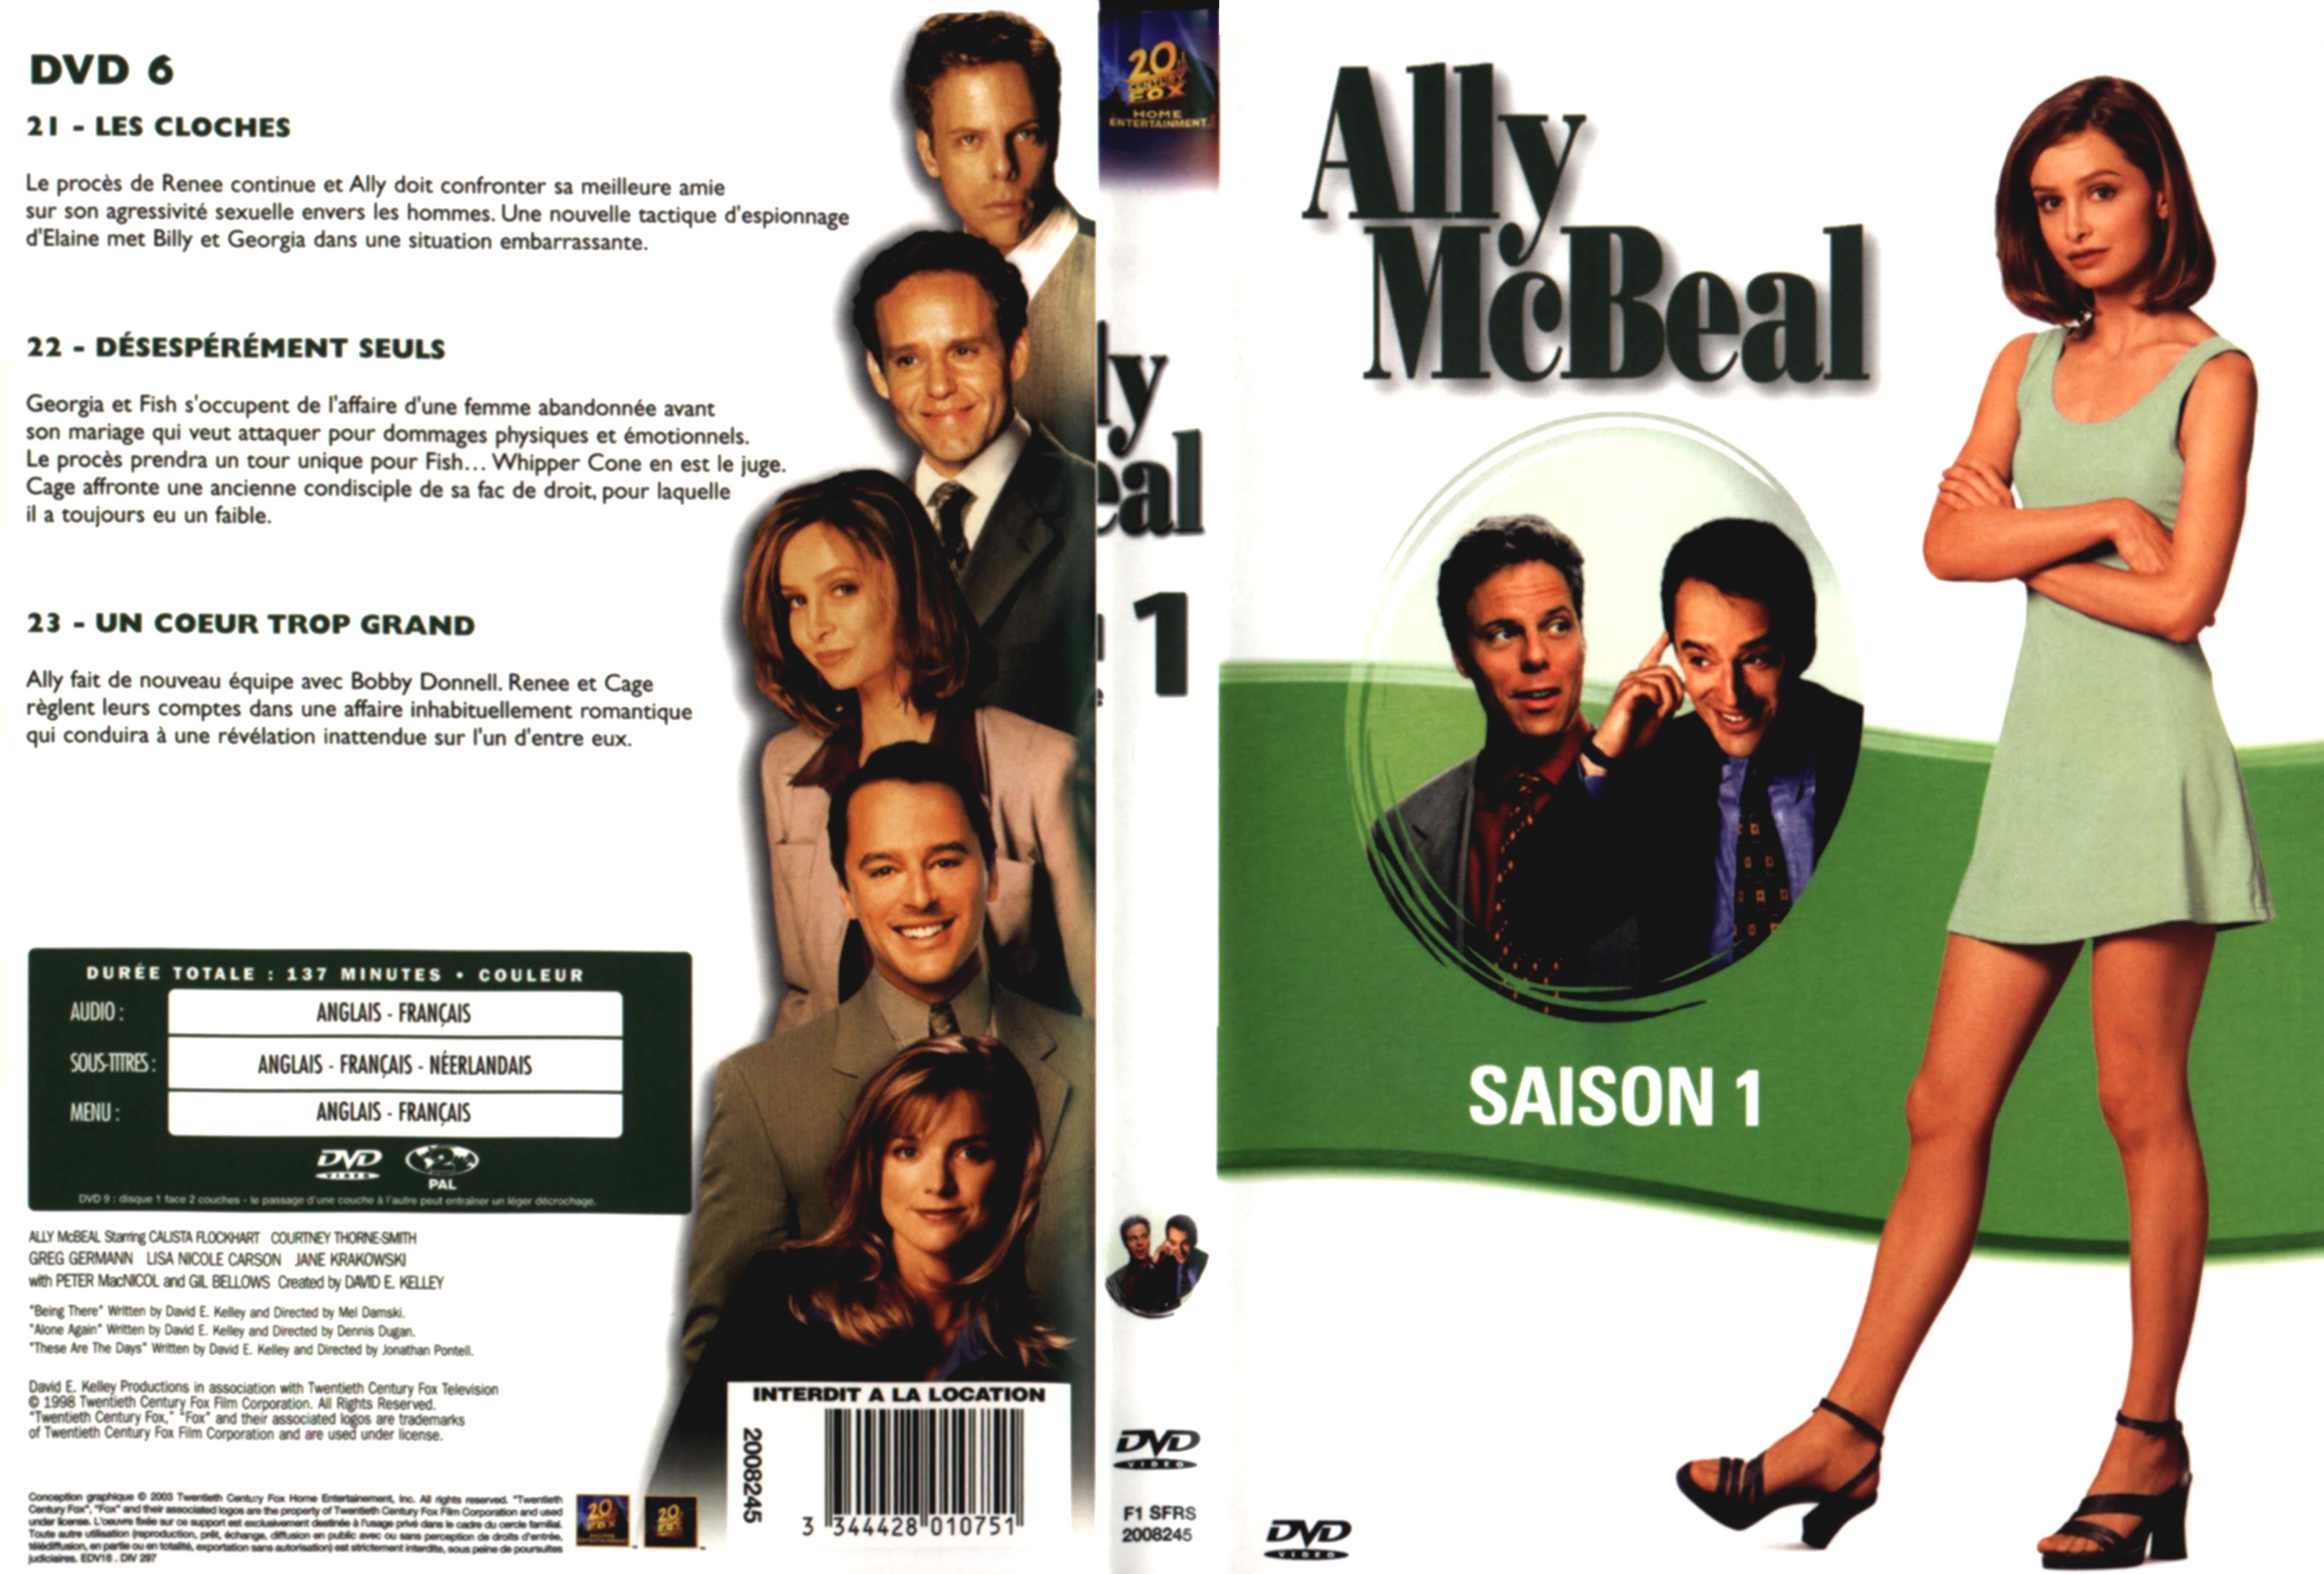 Jaquette DVD Ally McBeal Saison 1 DVD 6